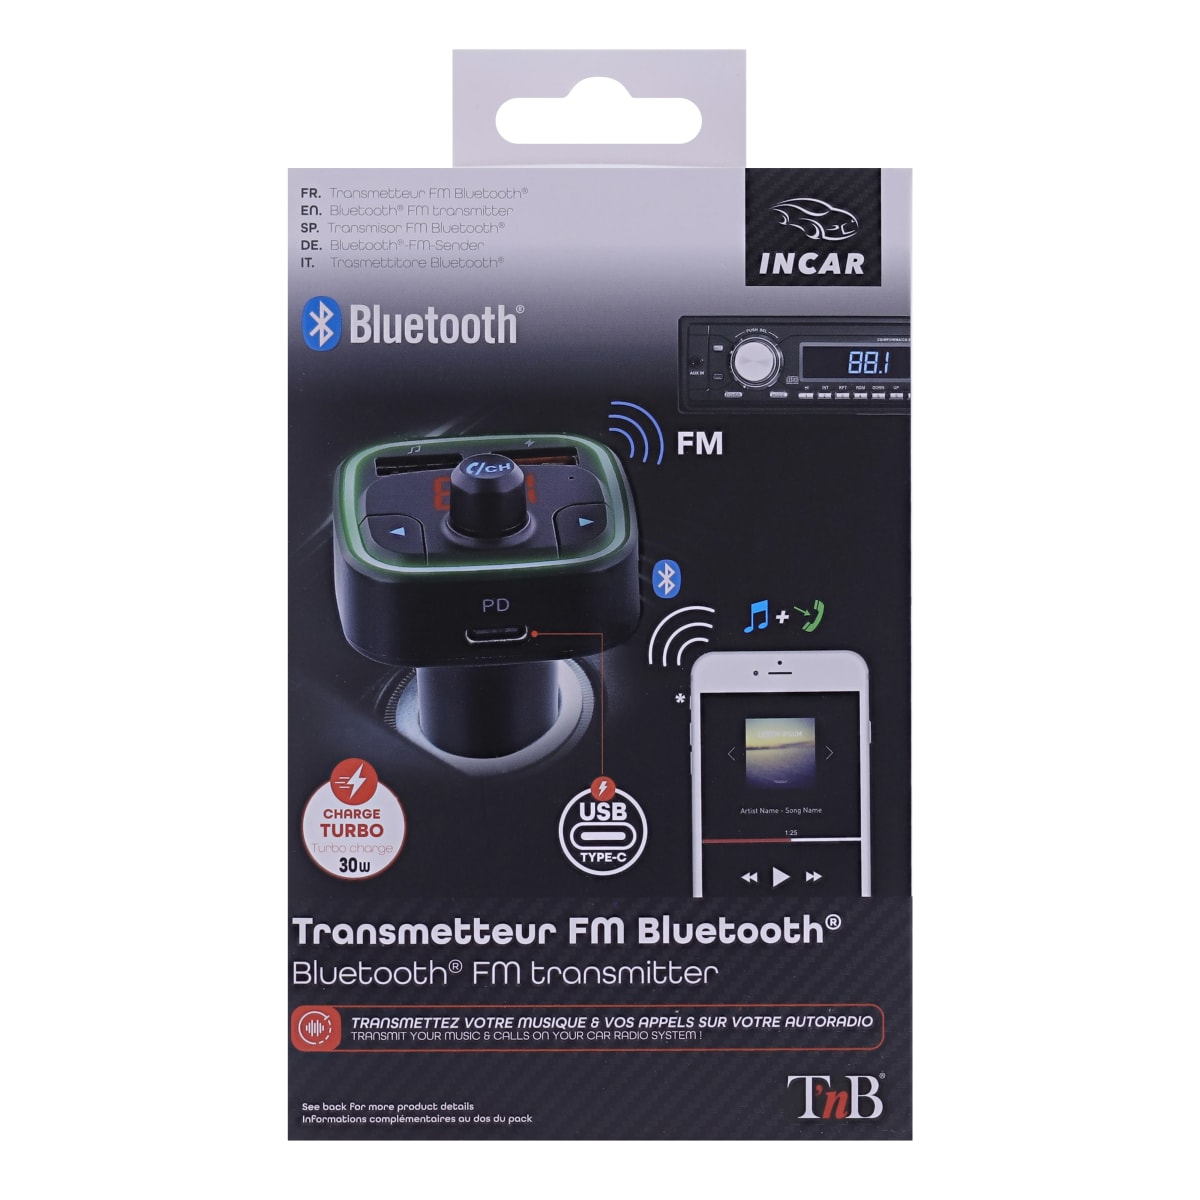 Premium Bluetooth FM transmitter - T'nB